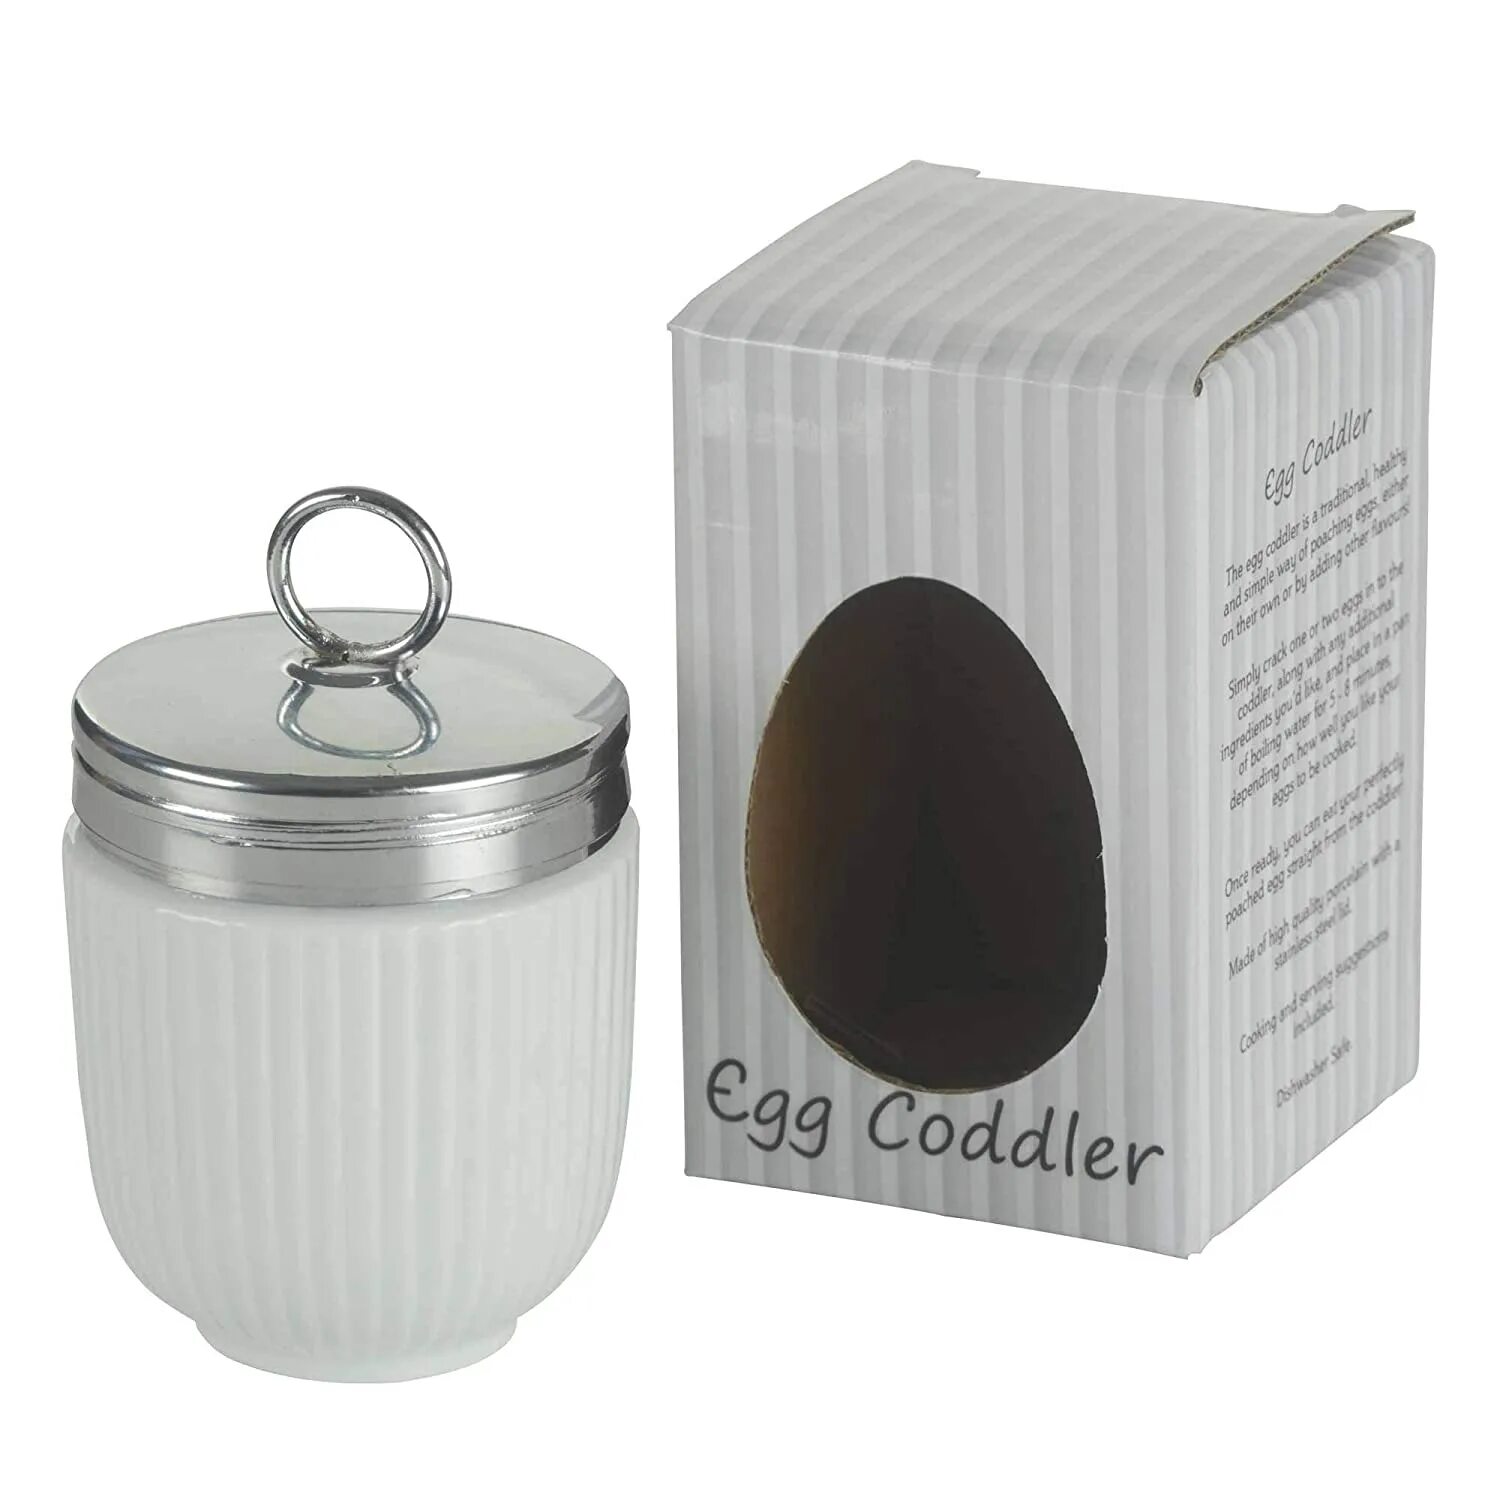 Коддлер. Кодлер bia. Coddler Egg. Coddler Egg Пушкин. Коддлер что это.